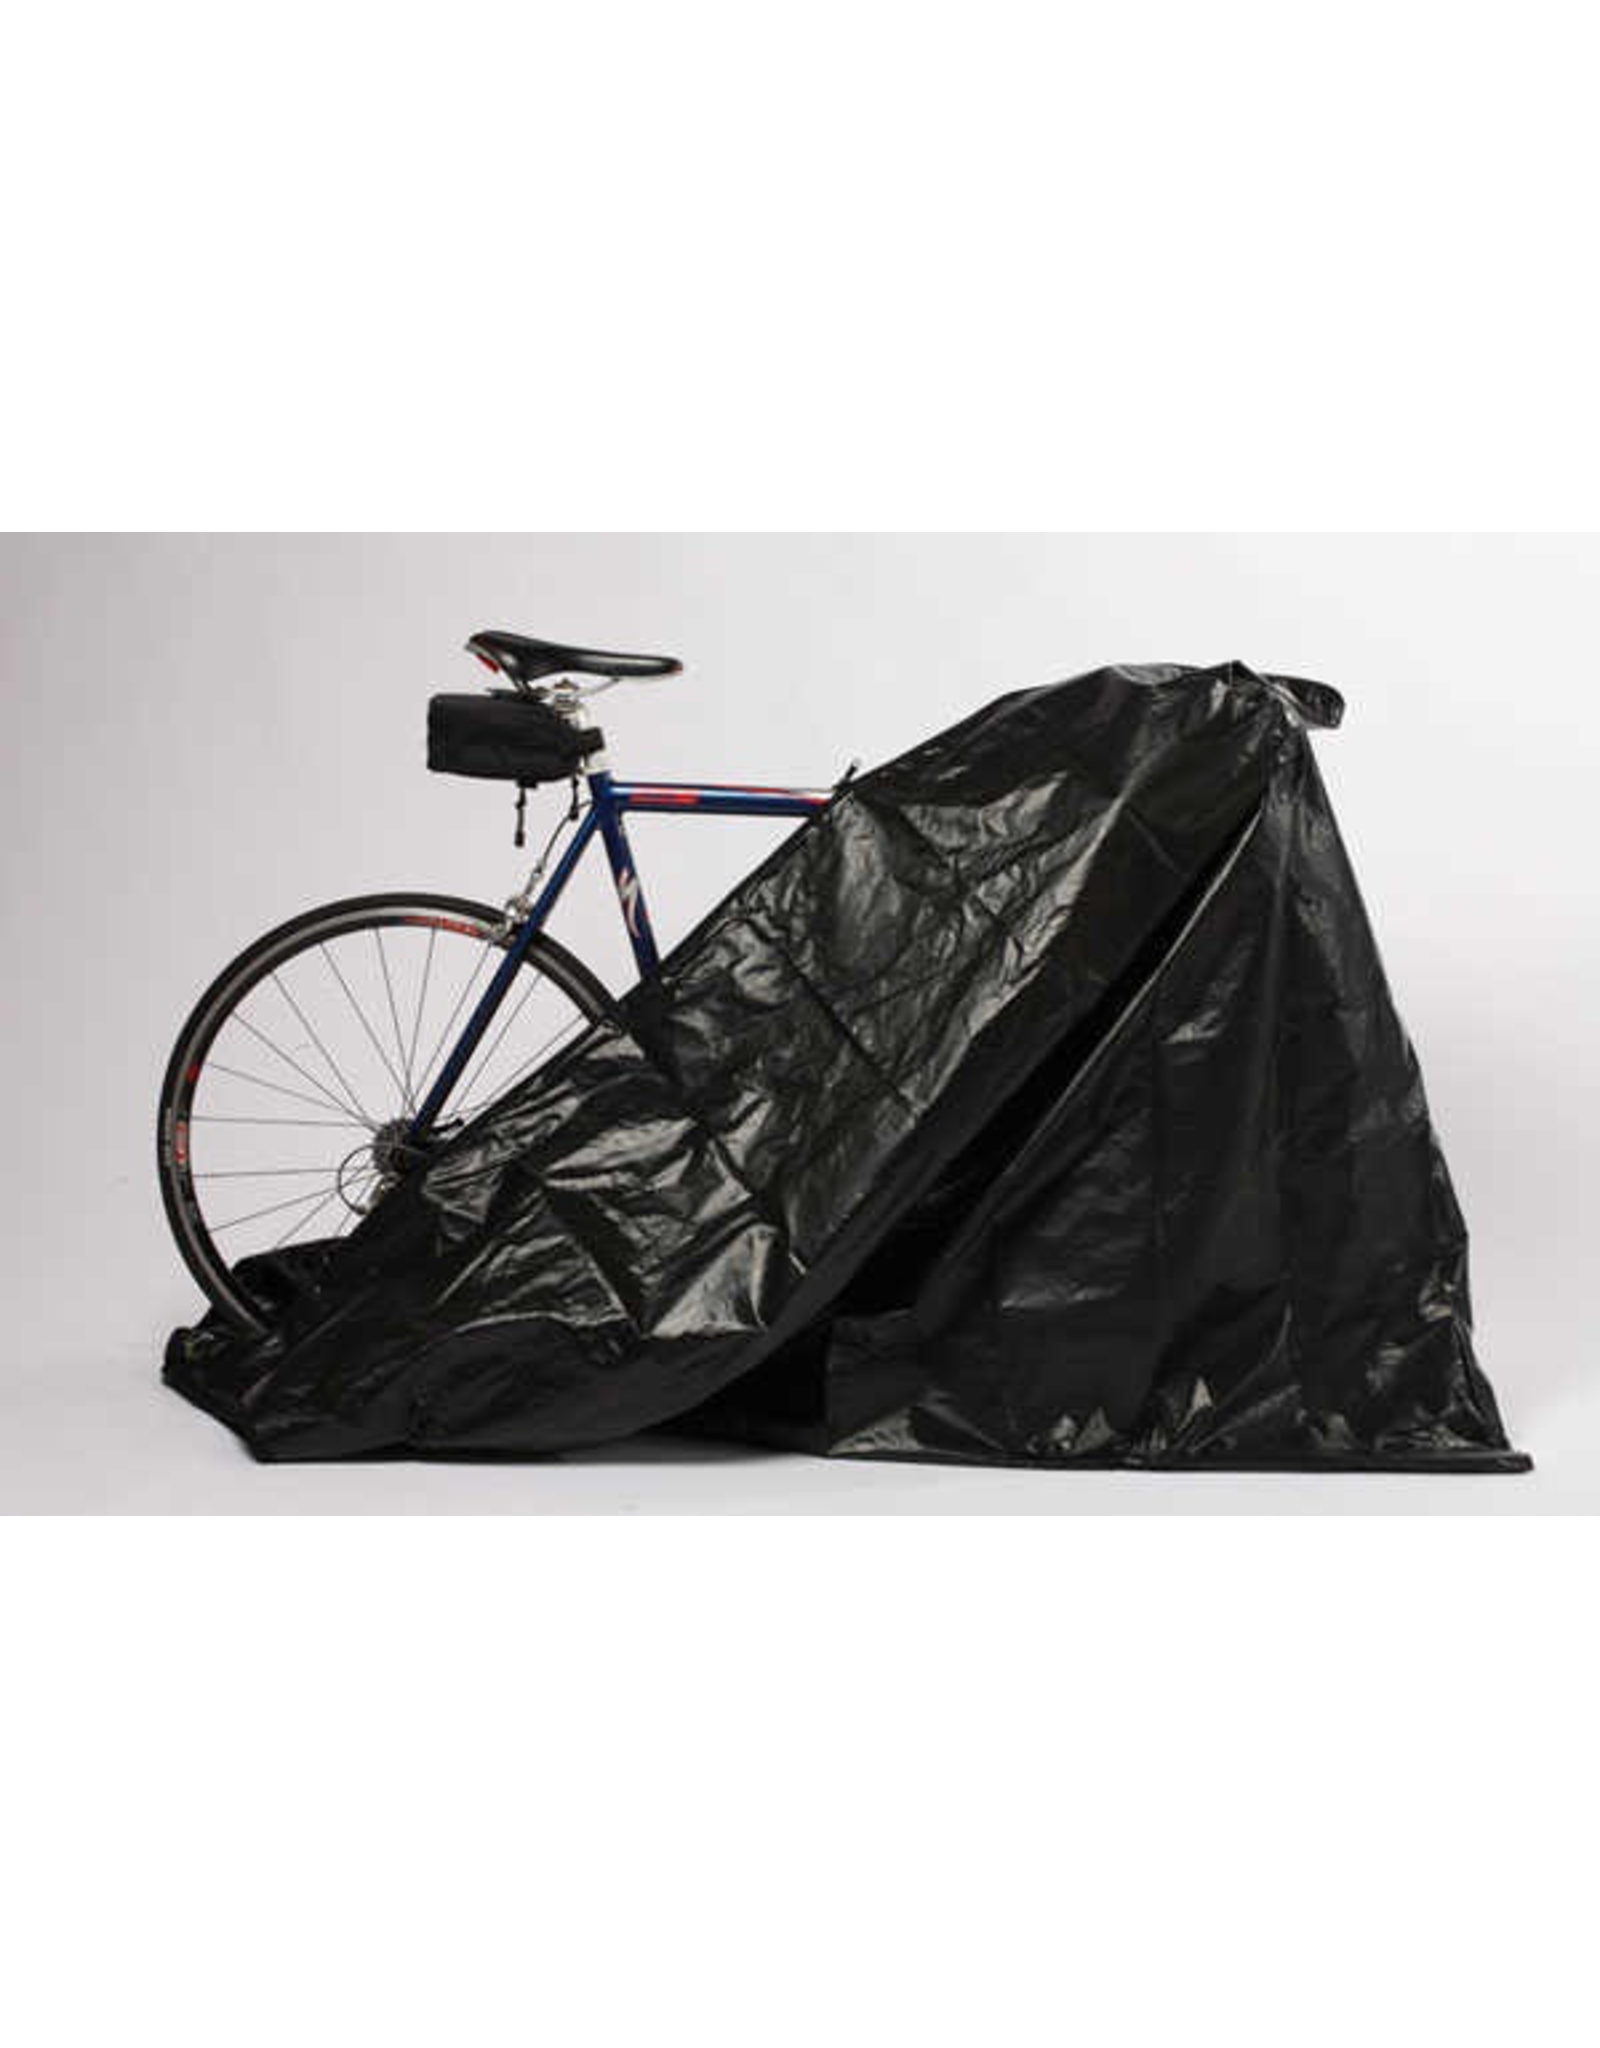 Zerust Rust-Preventive Bicycle Storage Bag 84”x59” with heavy duty zipper